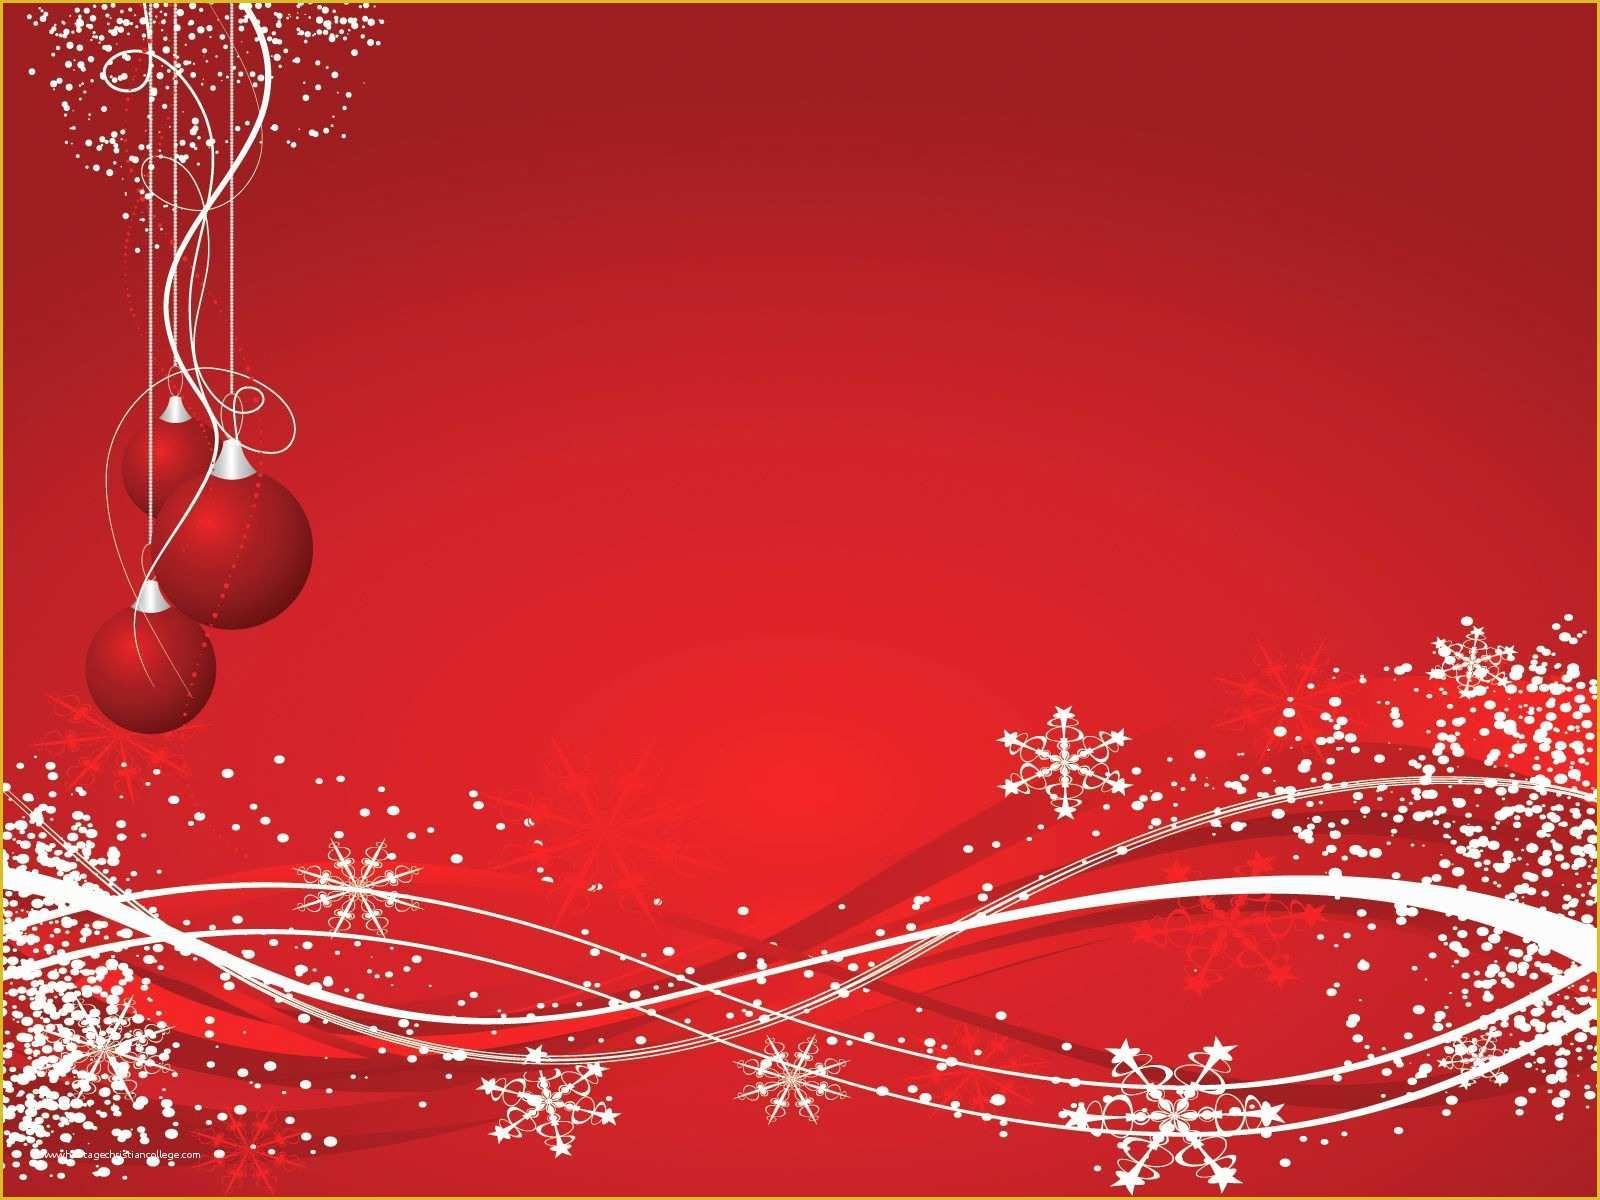 Free Christmas Photo Templates Of Xmas Snowflakes Powerpoint Templates Christmas Red